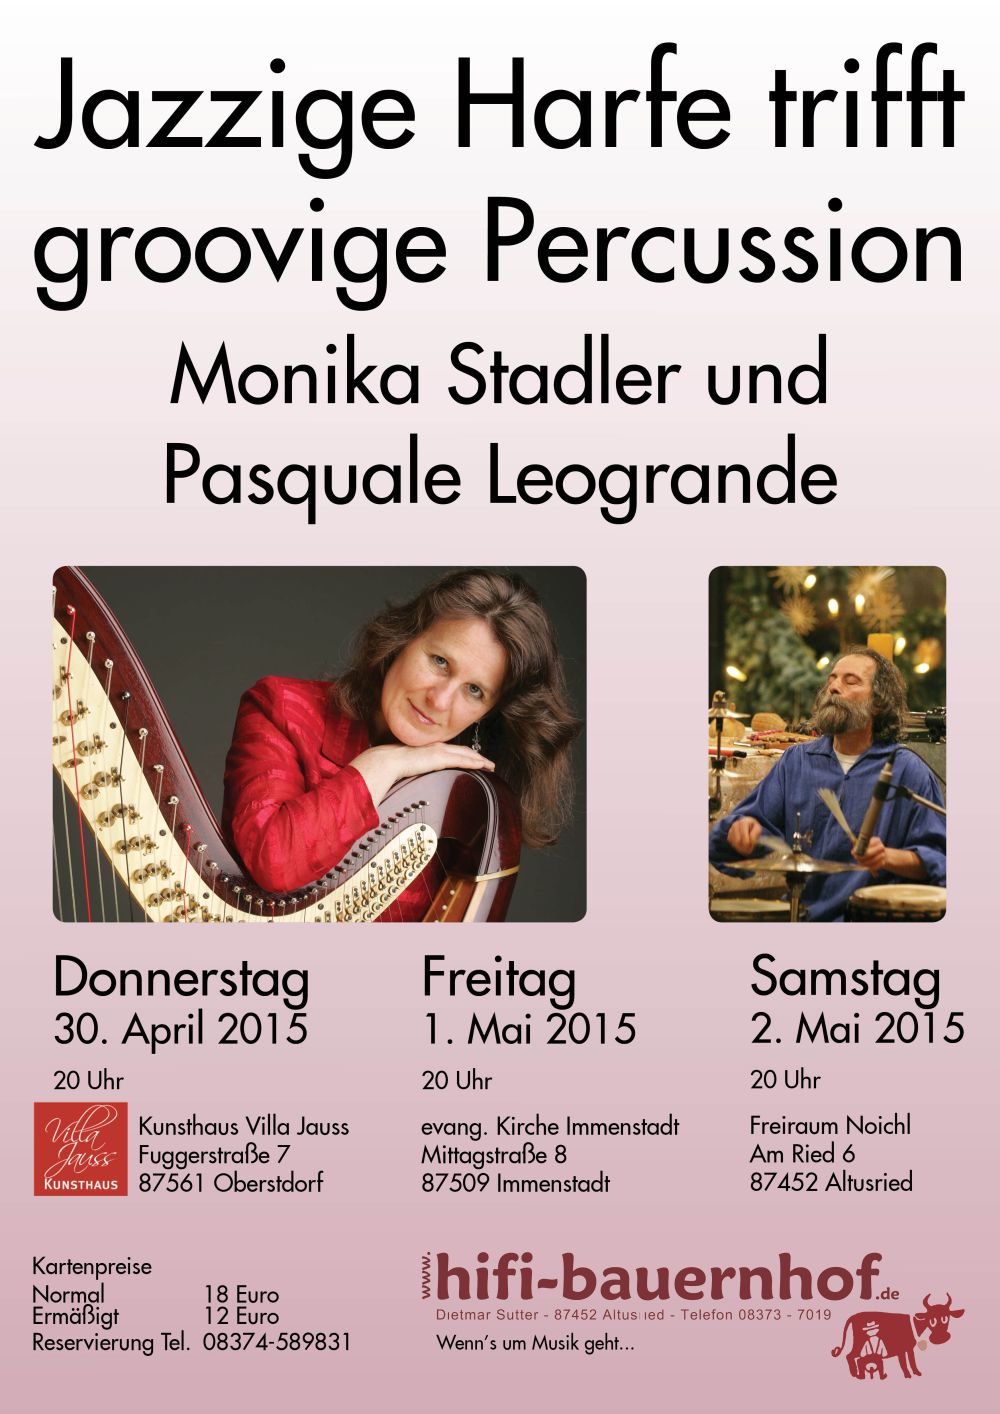 Weltklasse Konzert veranstaltet vom Hifi-Bauernhof! Monika Stadler mit Pasquale Leogrande Groove-Harfe trifft Percussion Stadler- Leorande